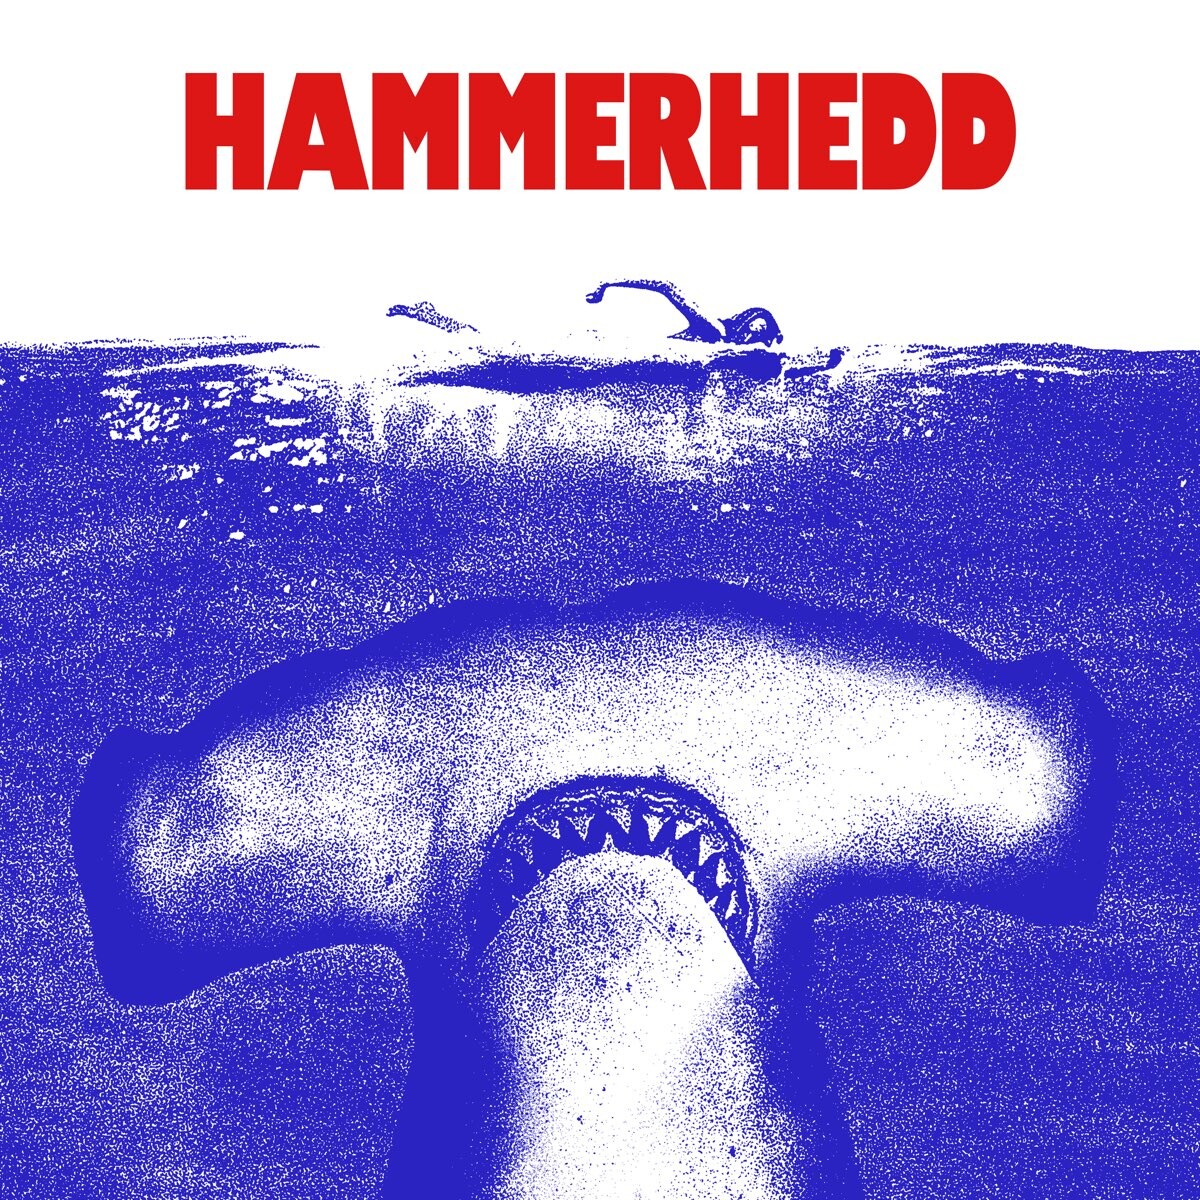 hammerhedd-nonetheless